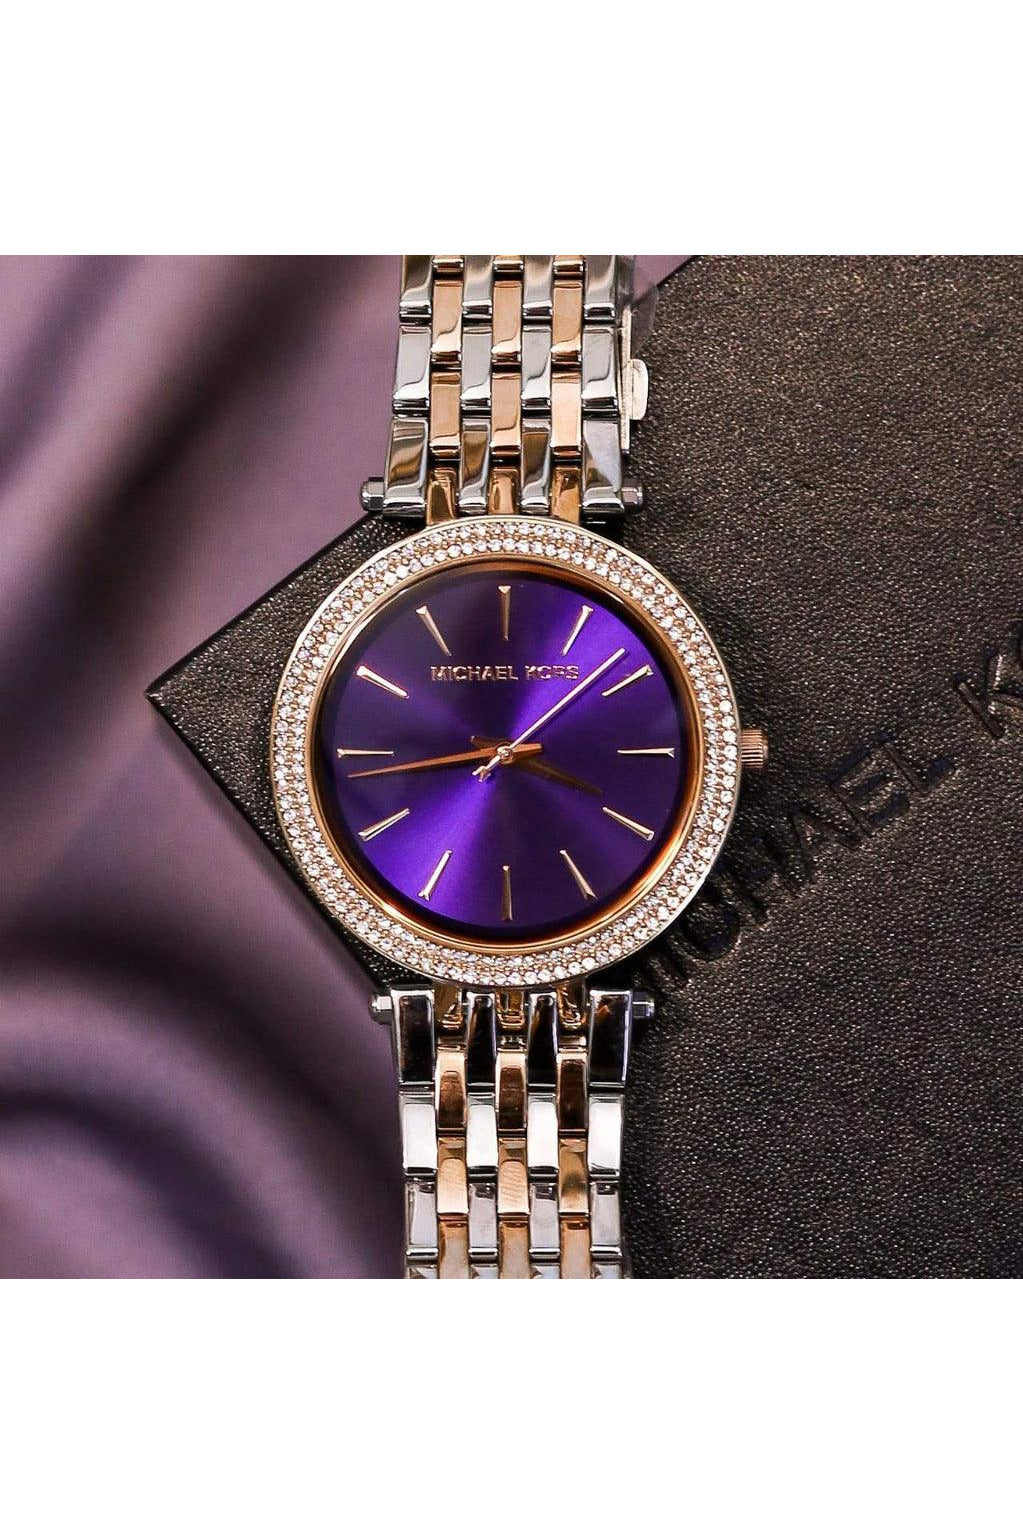 Buy Michael Kors Darci Crystal Purple Dial Watch for Women - 3353 in Pakistan